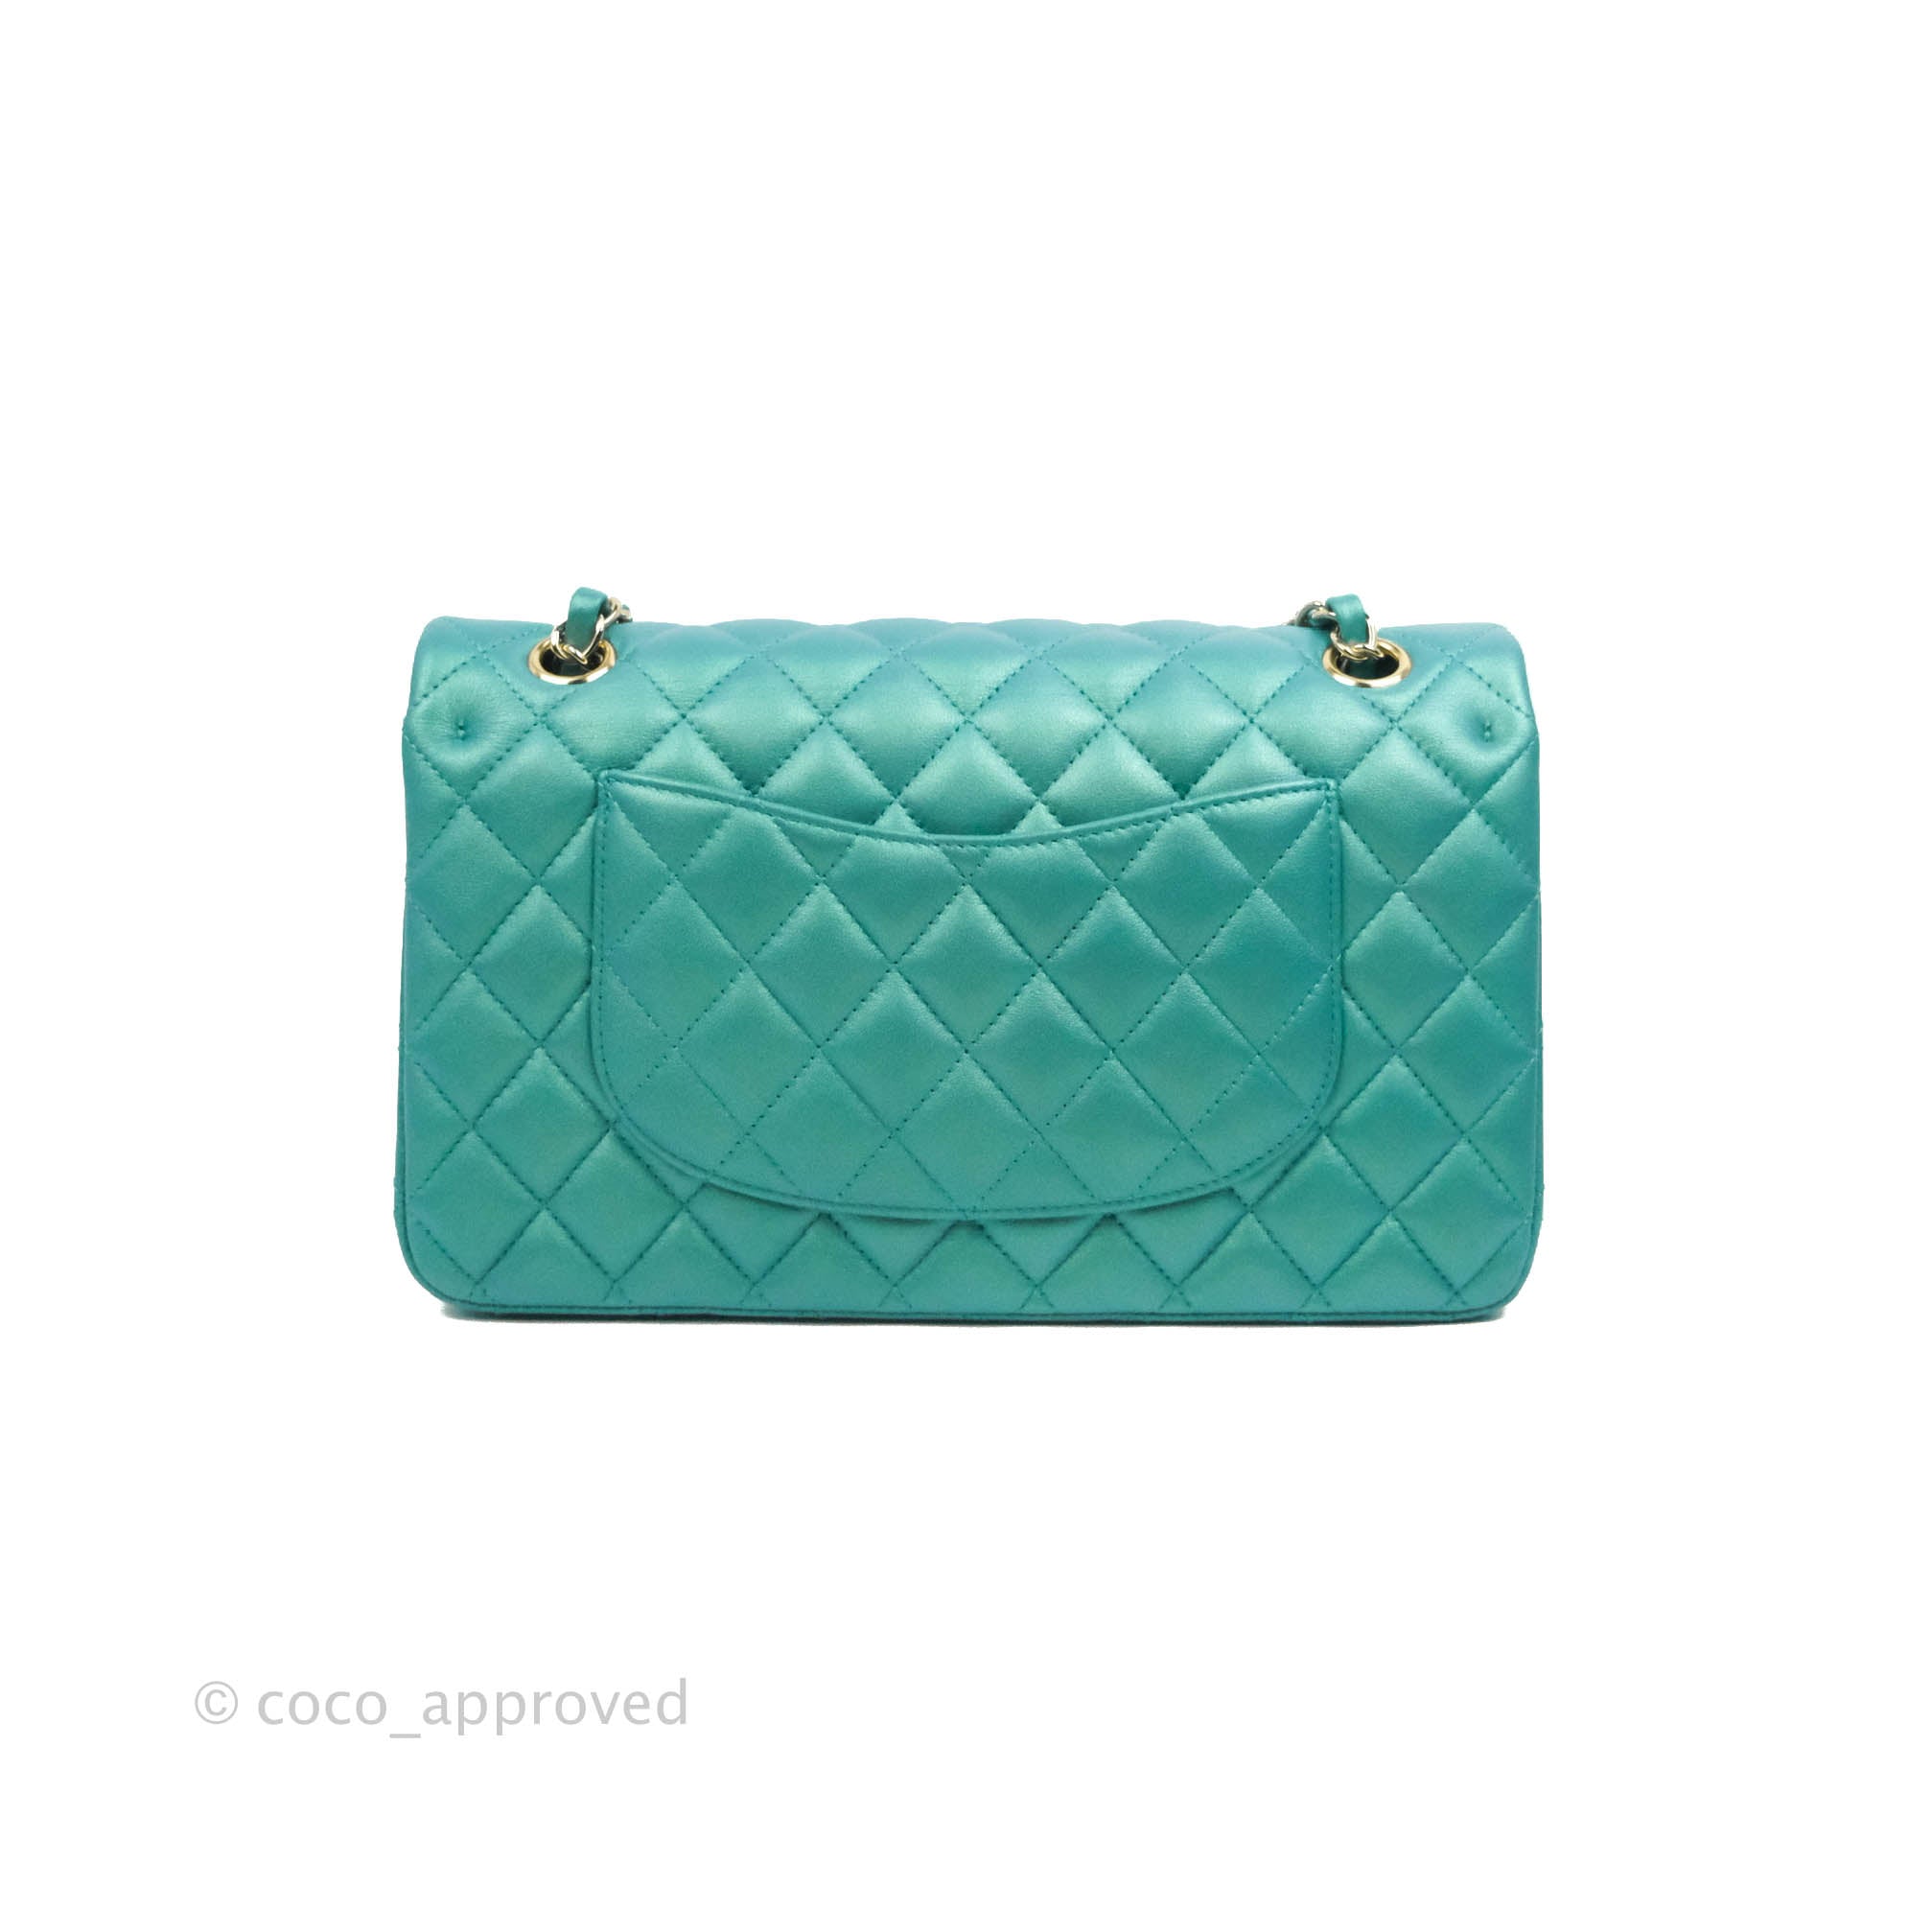 Chanel Turquoise Medium Classic Double Flap Lambskin Handbag